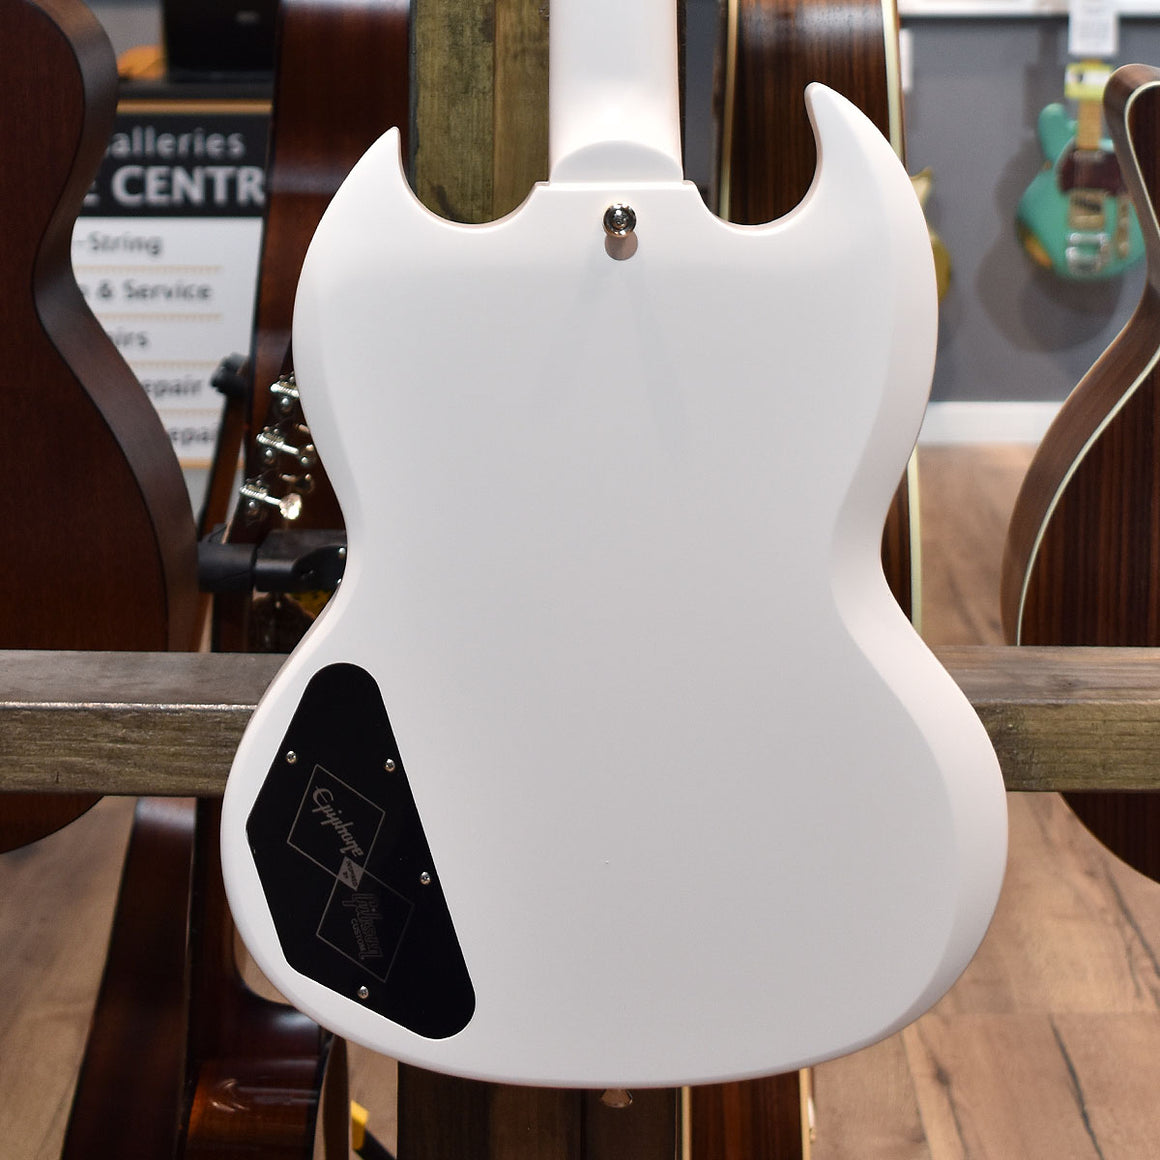 Epiphone 1961 Les Paul Standard SG Electric Guitar Classic Aged White W/Hard Case